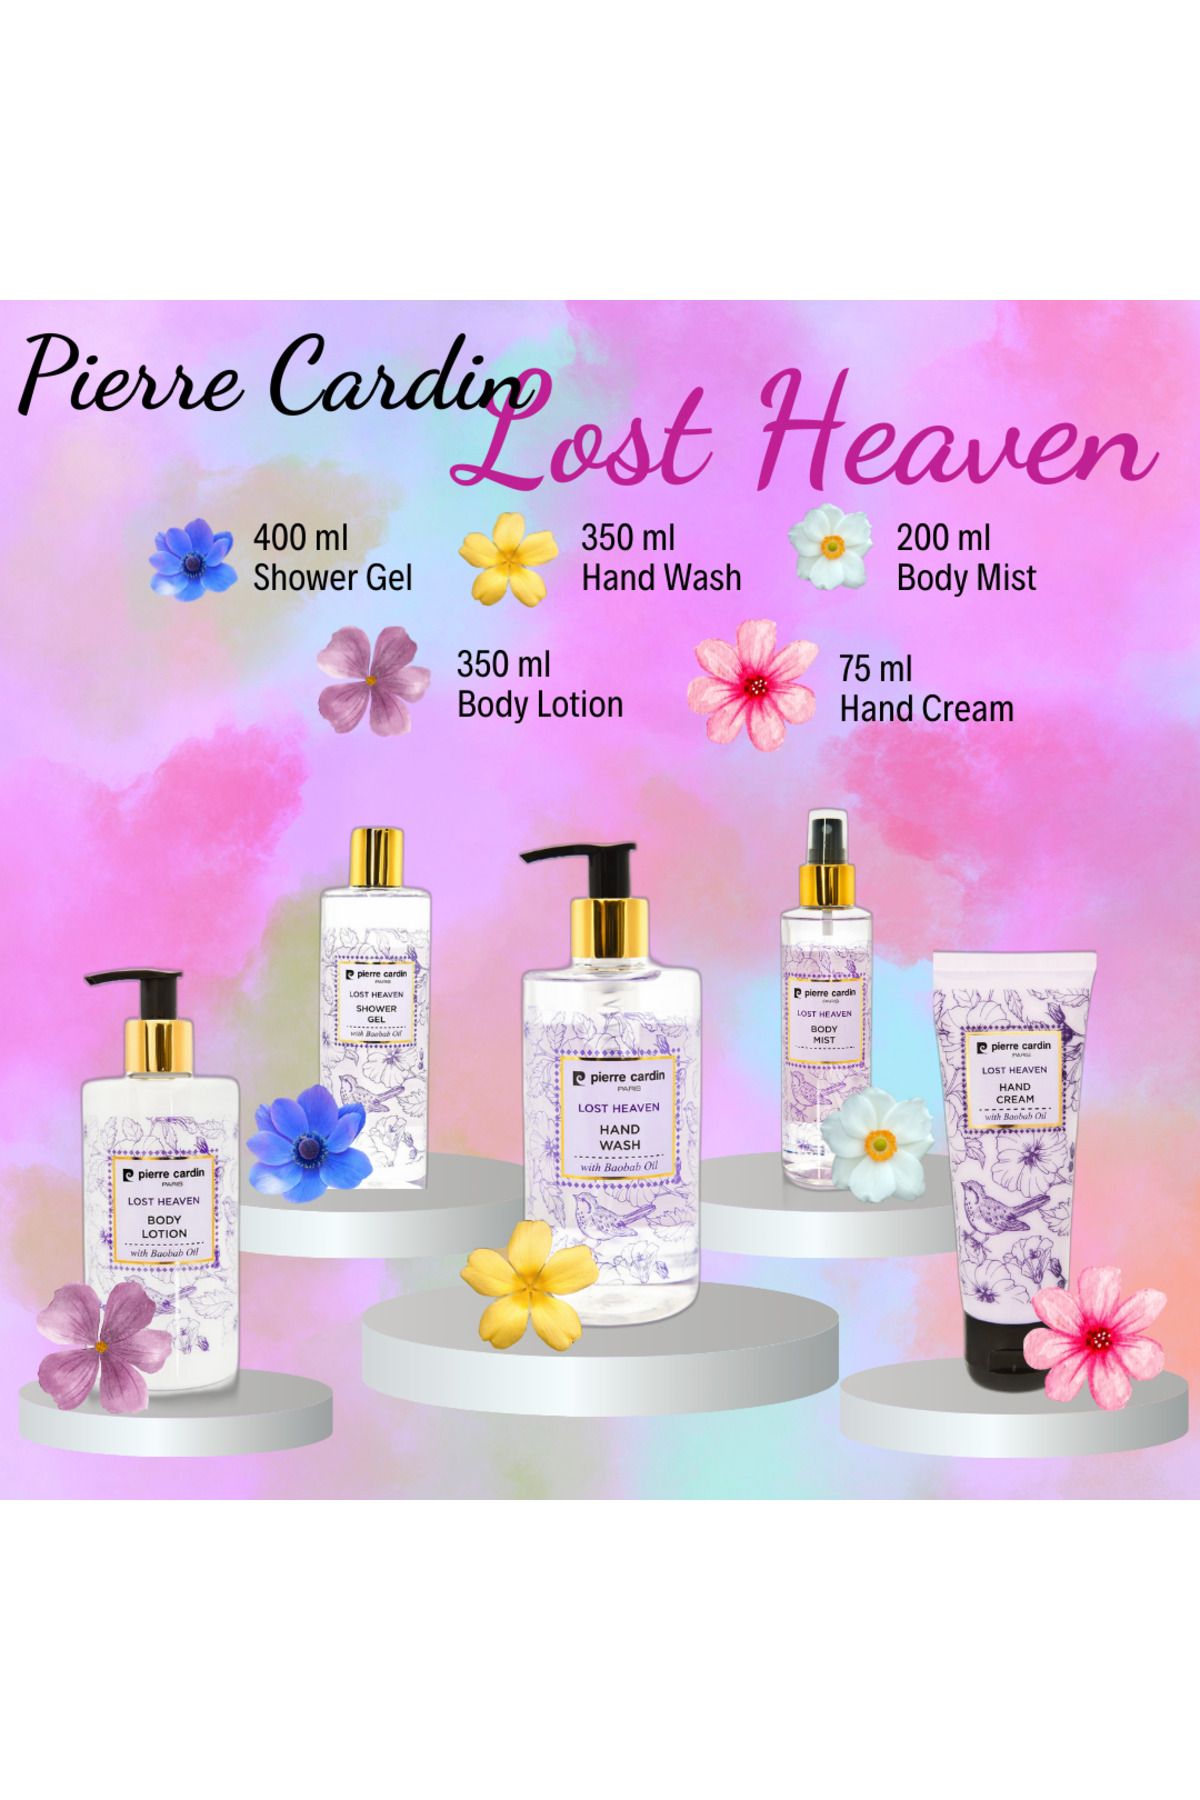 Pierre Cardin Lost Heaven Special Product Set